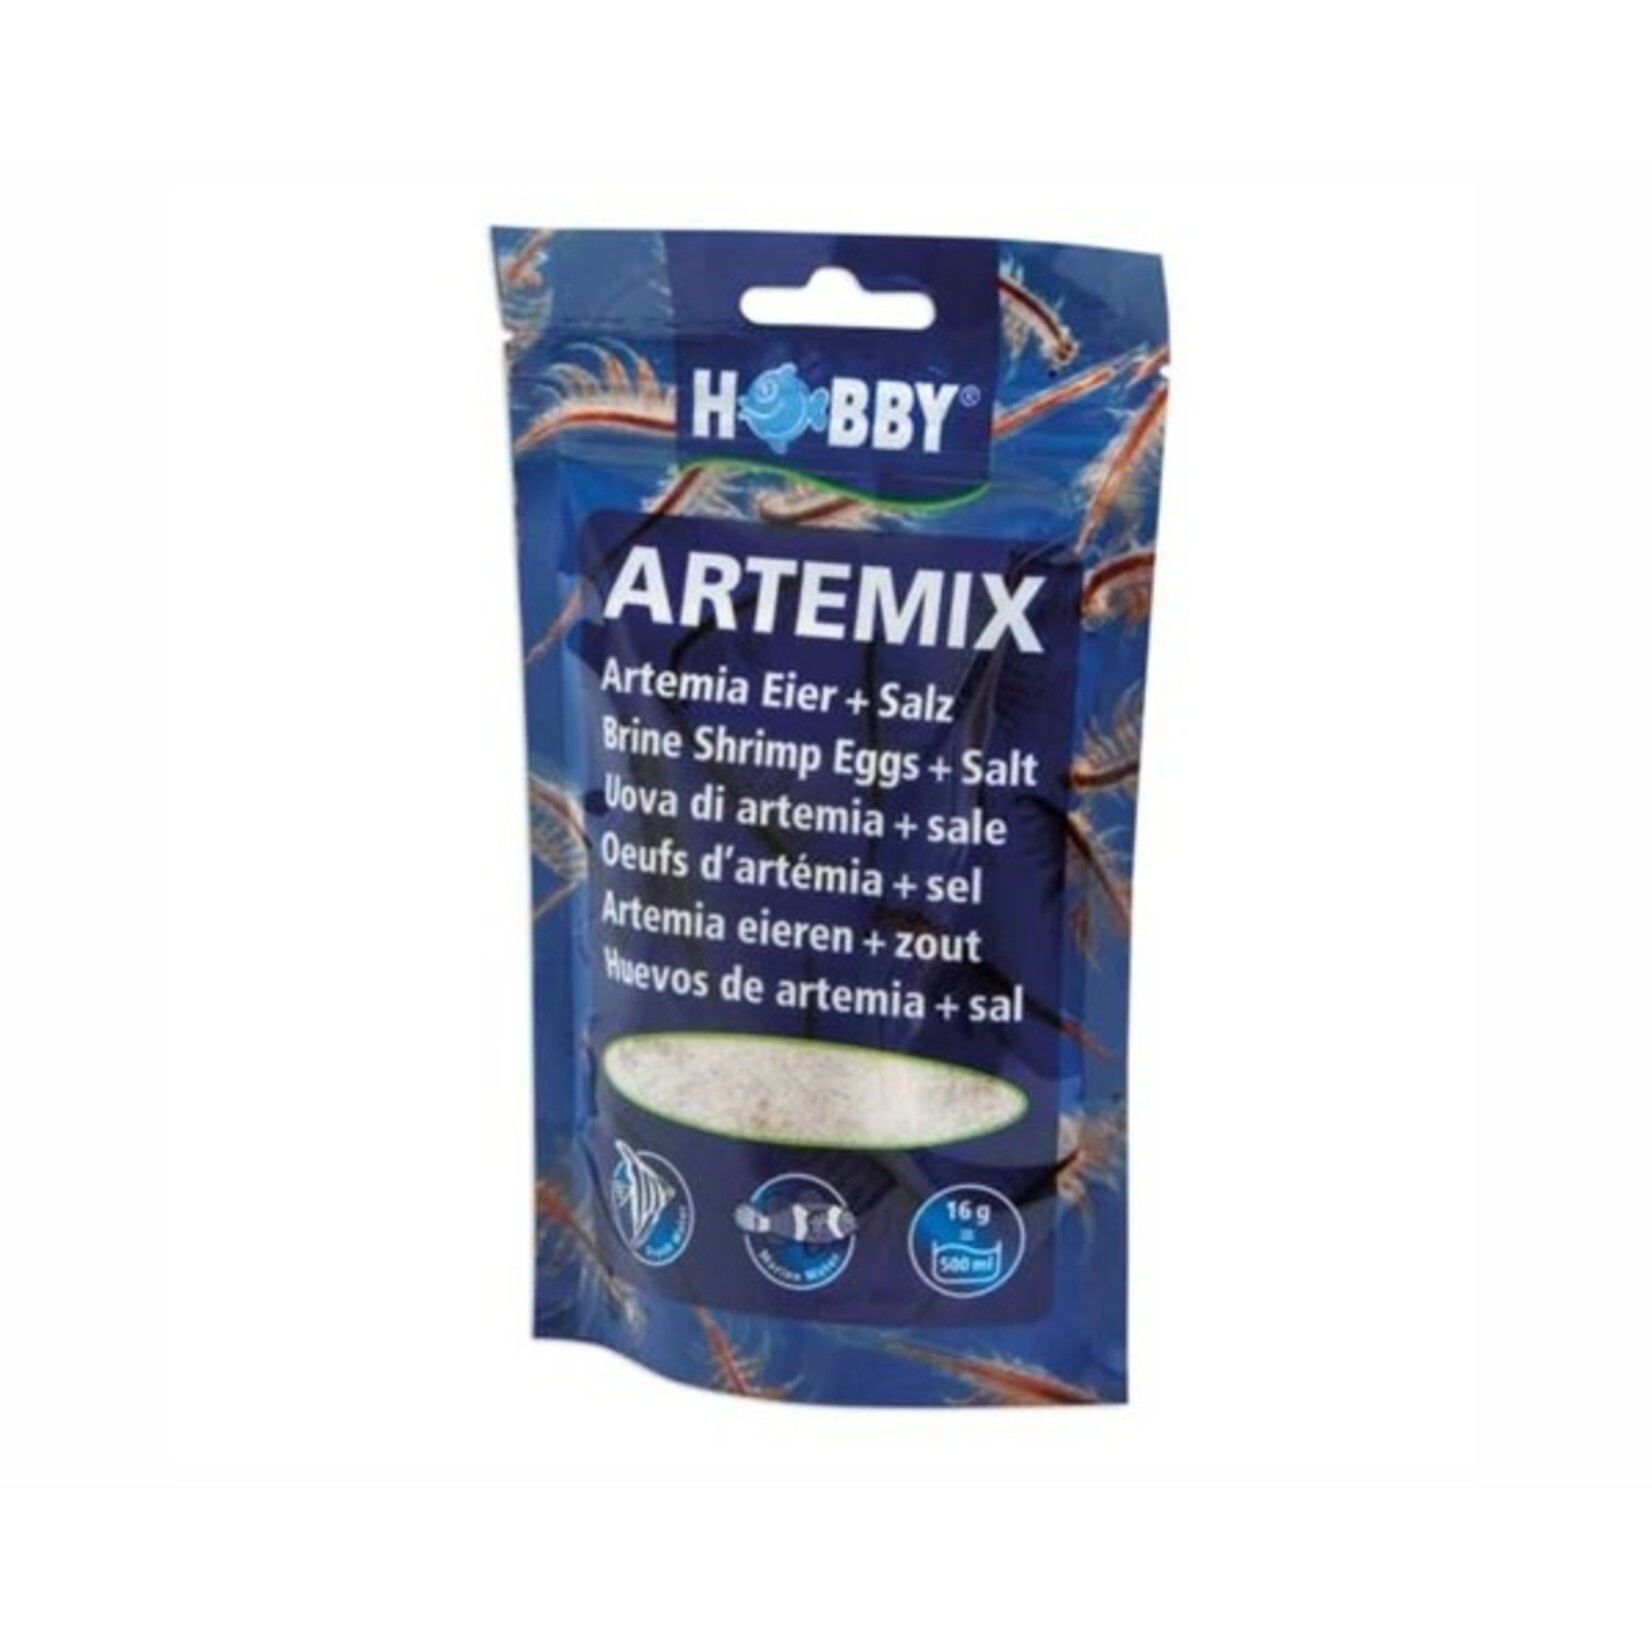 Hobby Artemix 195 g